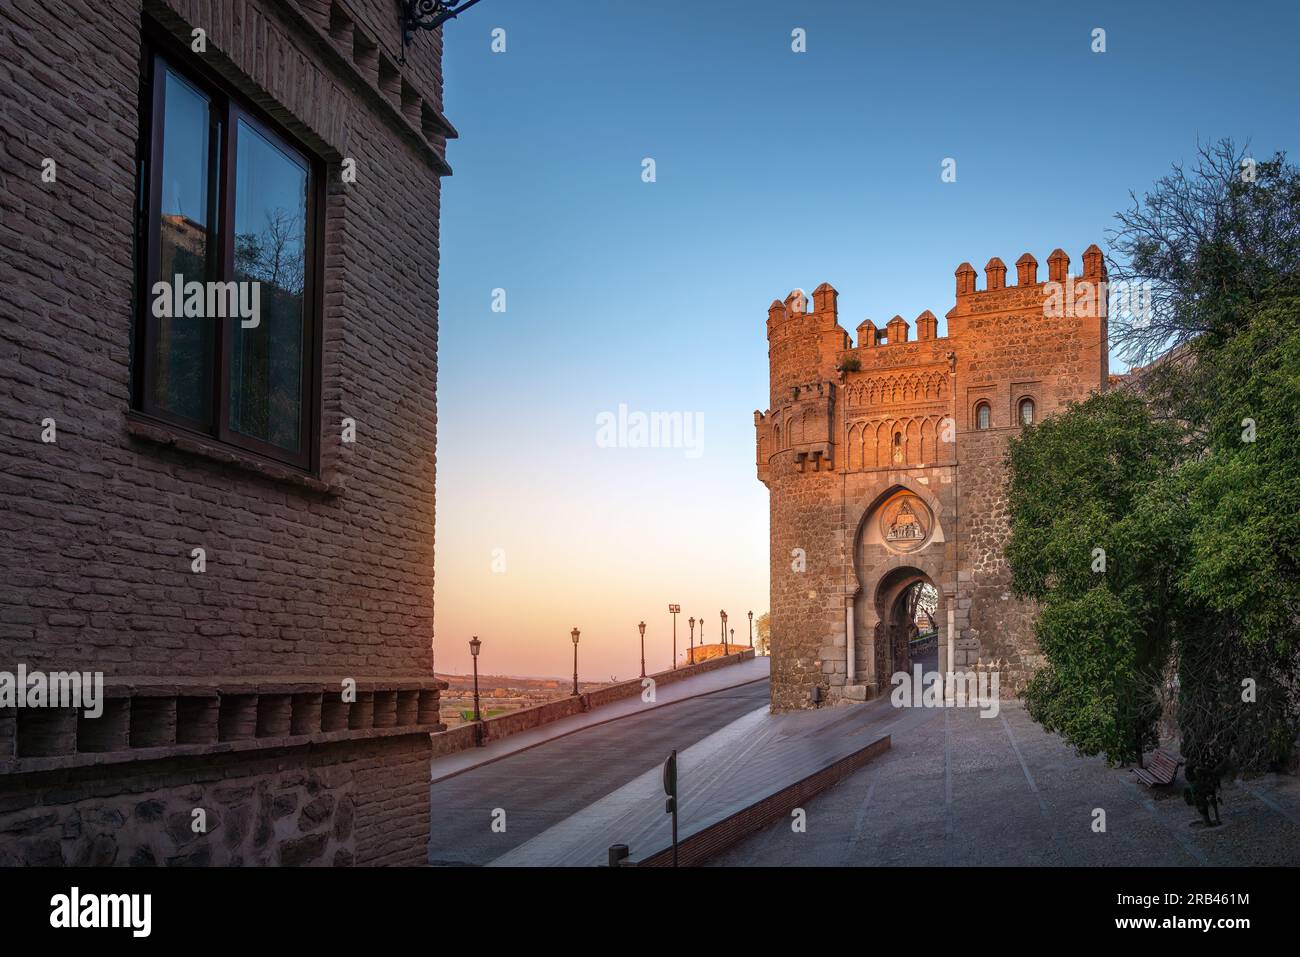 Puerta del Sol Gate at sunset - Toledo, Spain Stock Photo